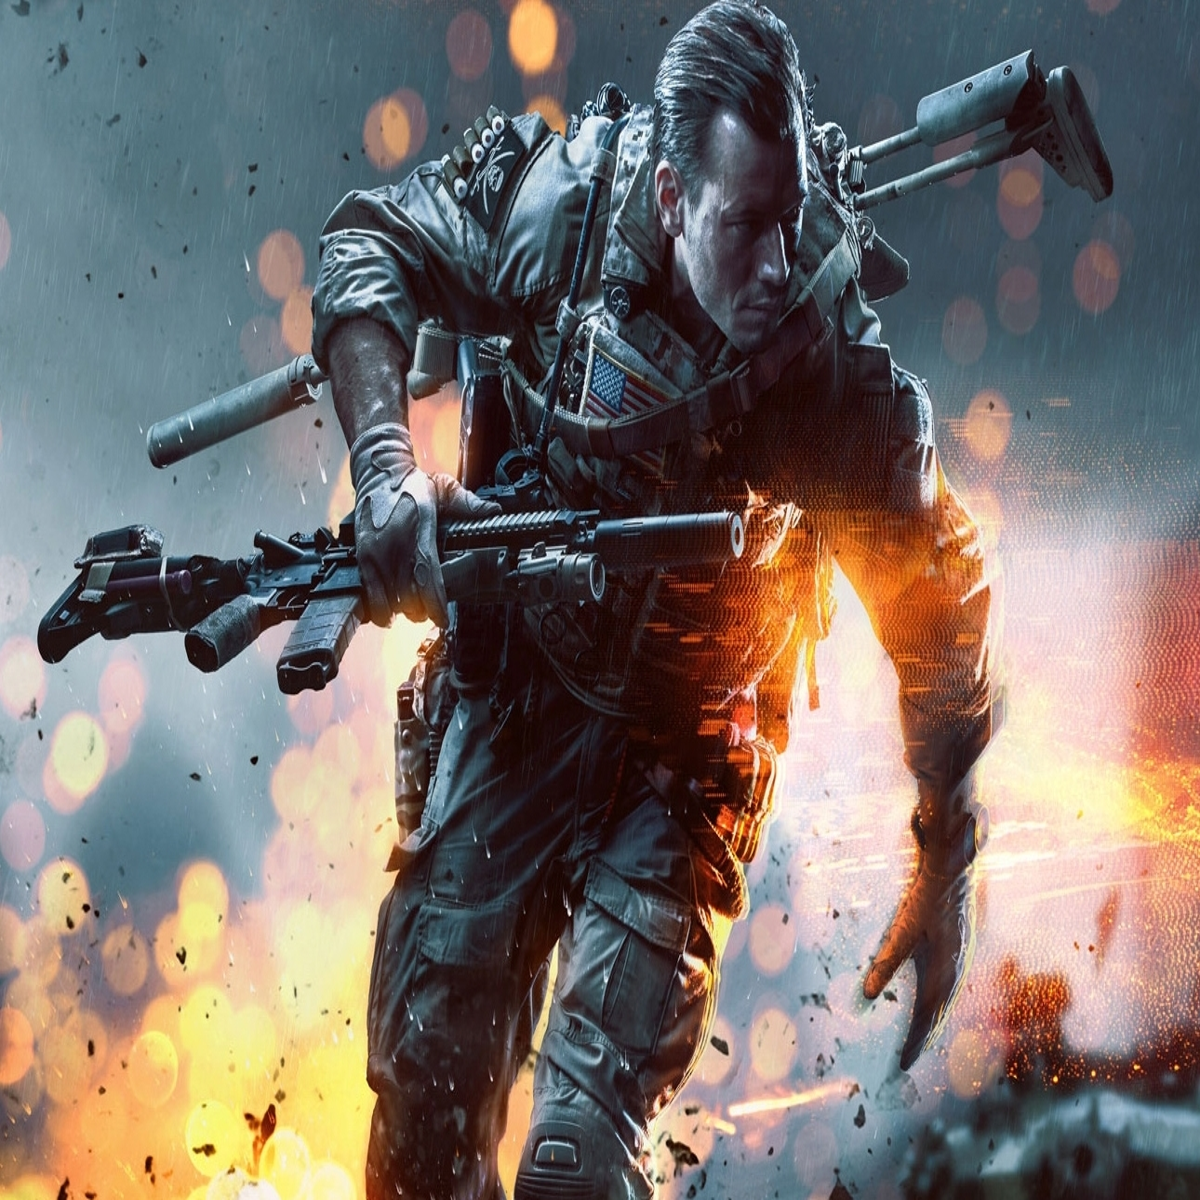 Battlefield 4: PS3 vs. PS4 Campaign Graphics Comparison 